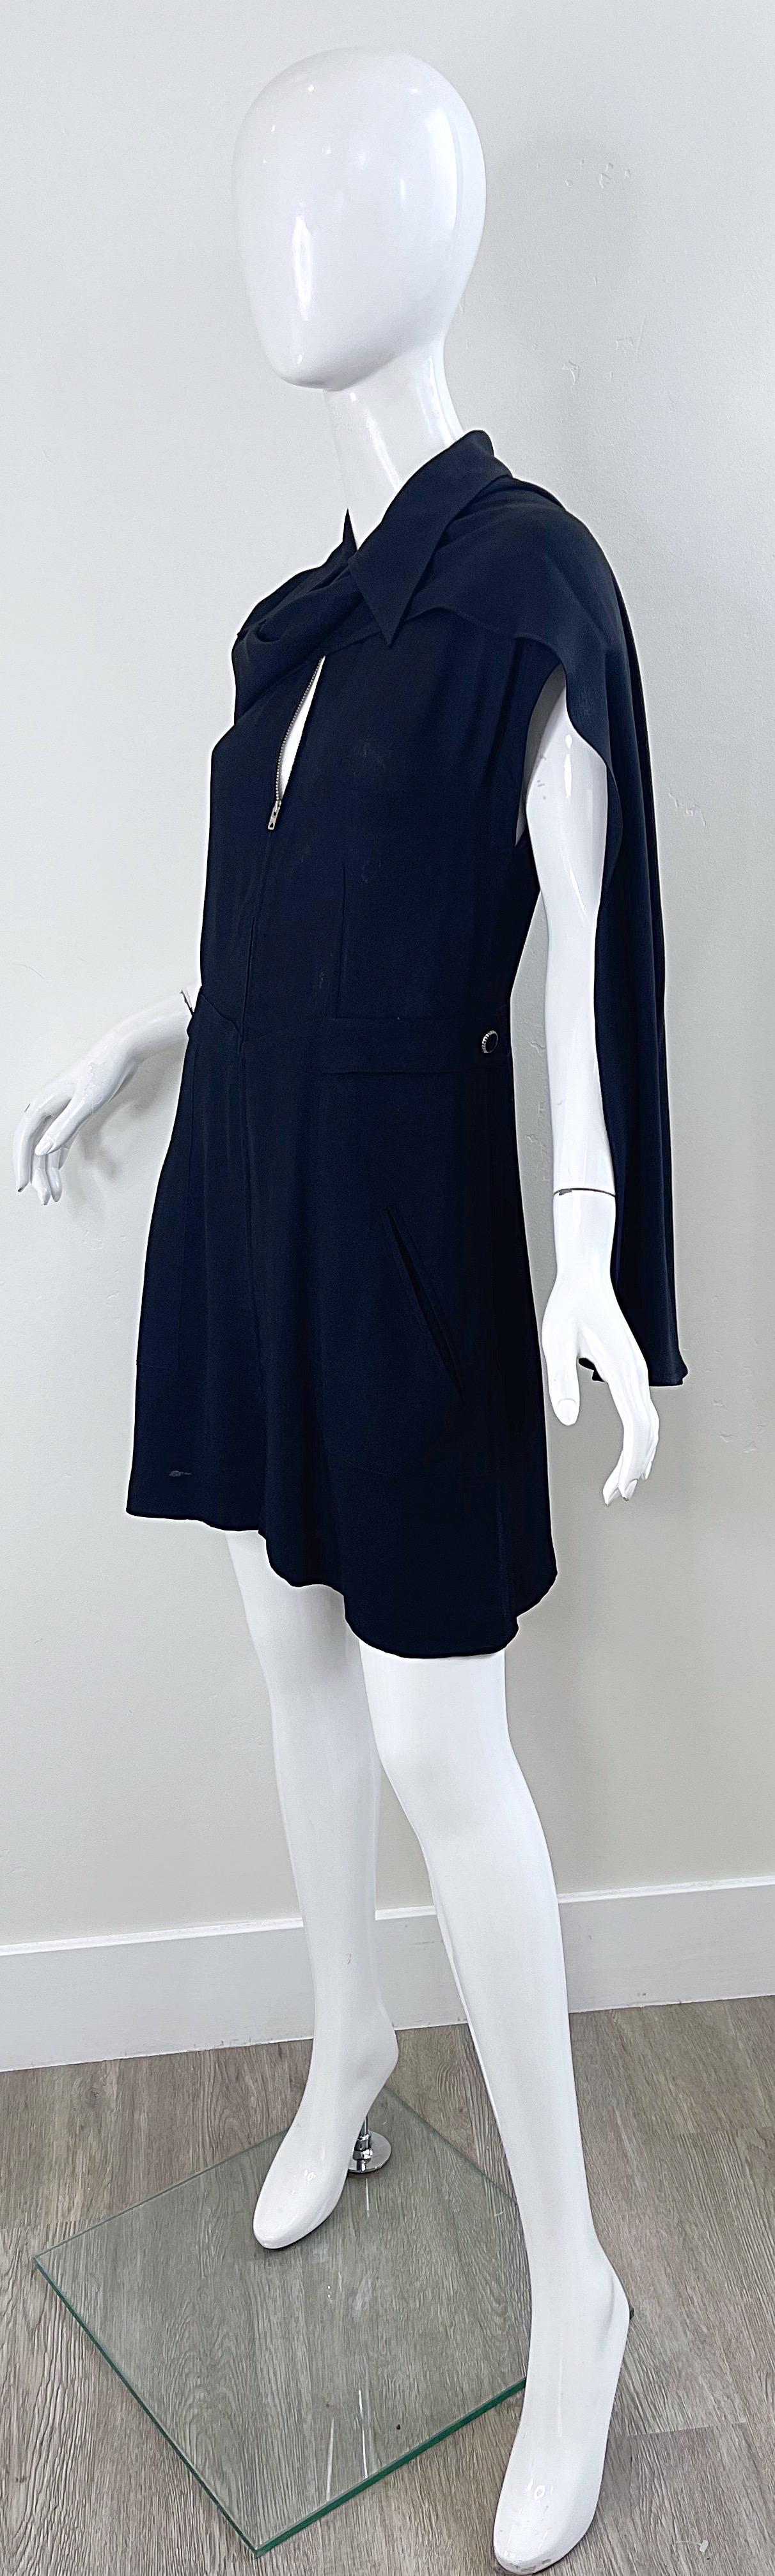 Karl Lagerfeld 1990s Black Avant Garde Vintage 90s Sash Zipper Mini Dress For Sale 4